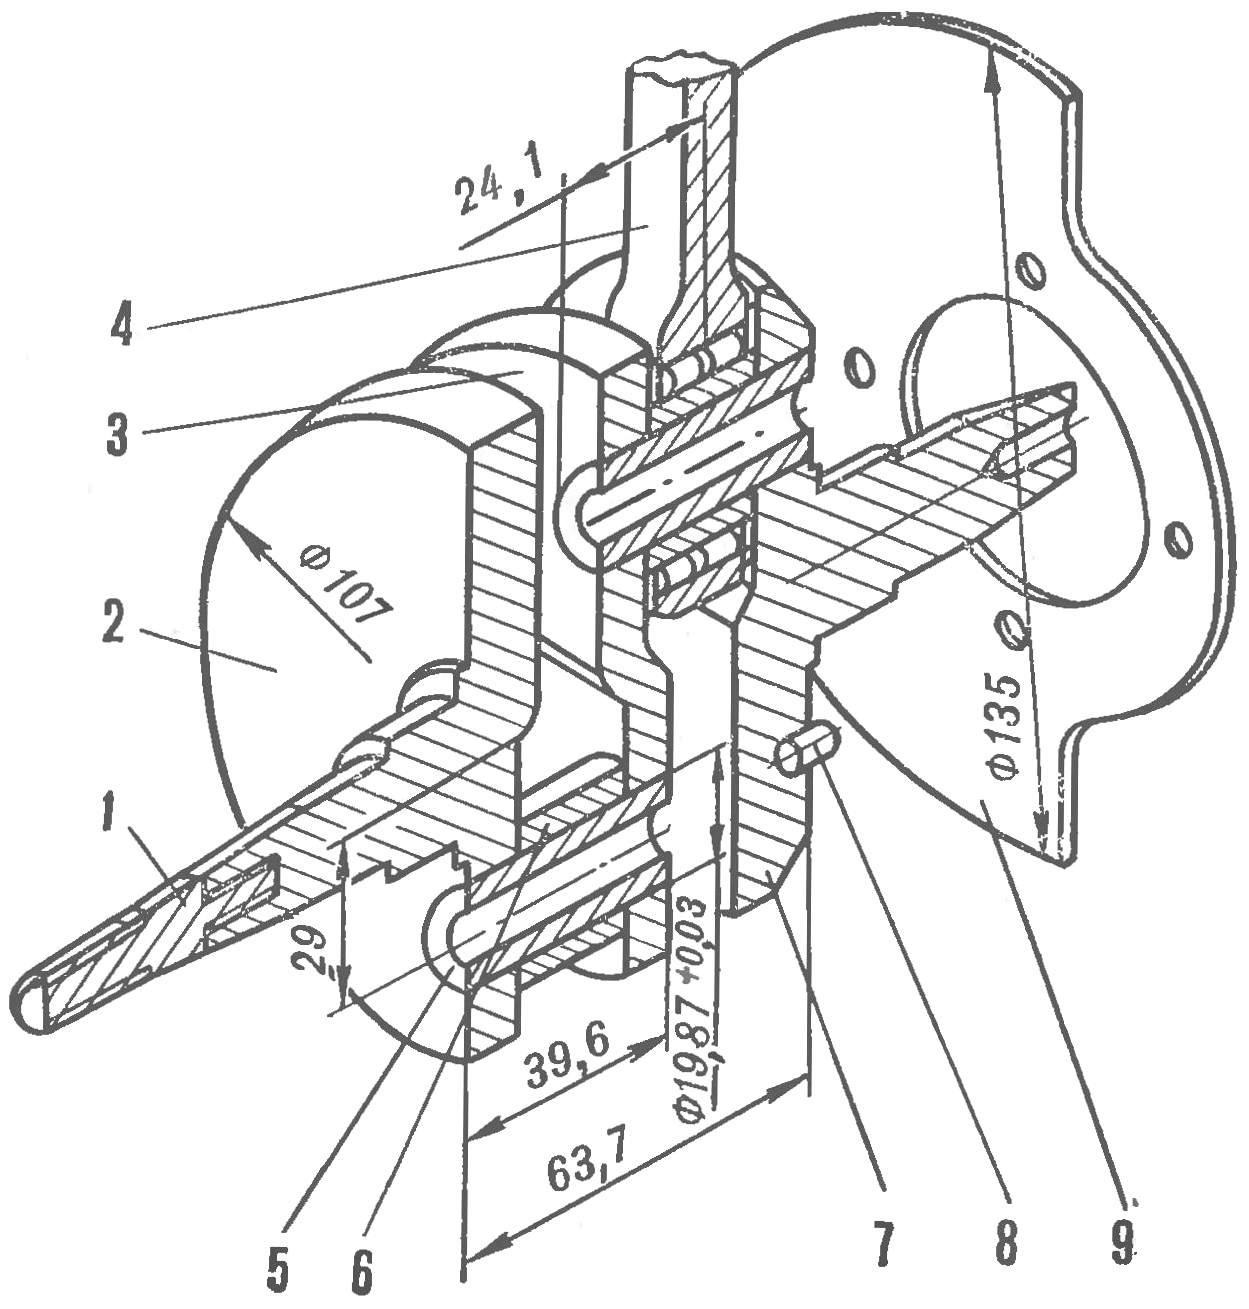 Fig. 5. Crankshaft Assembly with valve